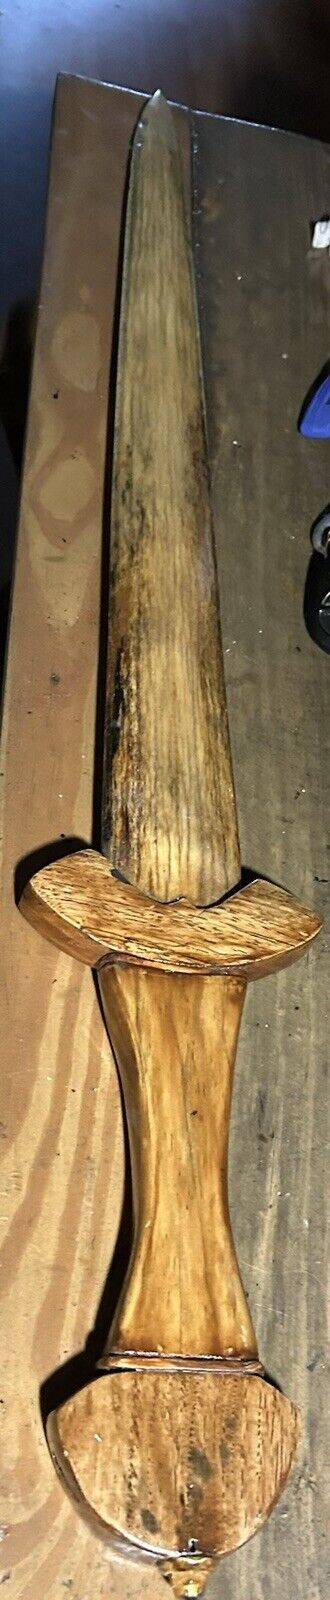 Swordfish Bill Sword Handcrafted Viking Sword,￼ ￼ ￼ Handle made From Tiki Wood